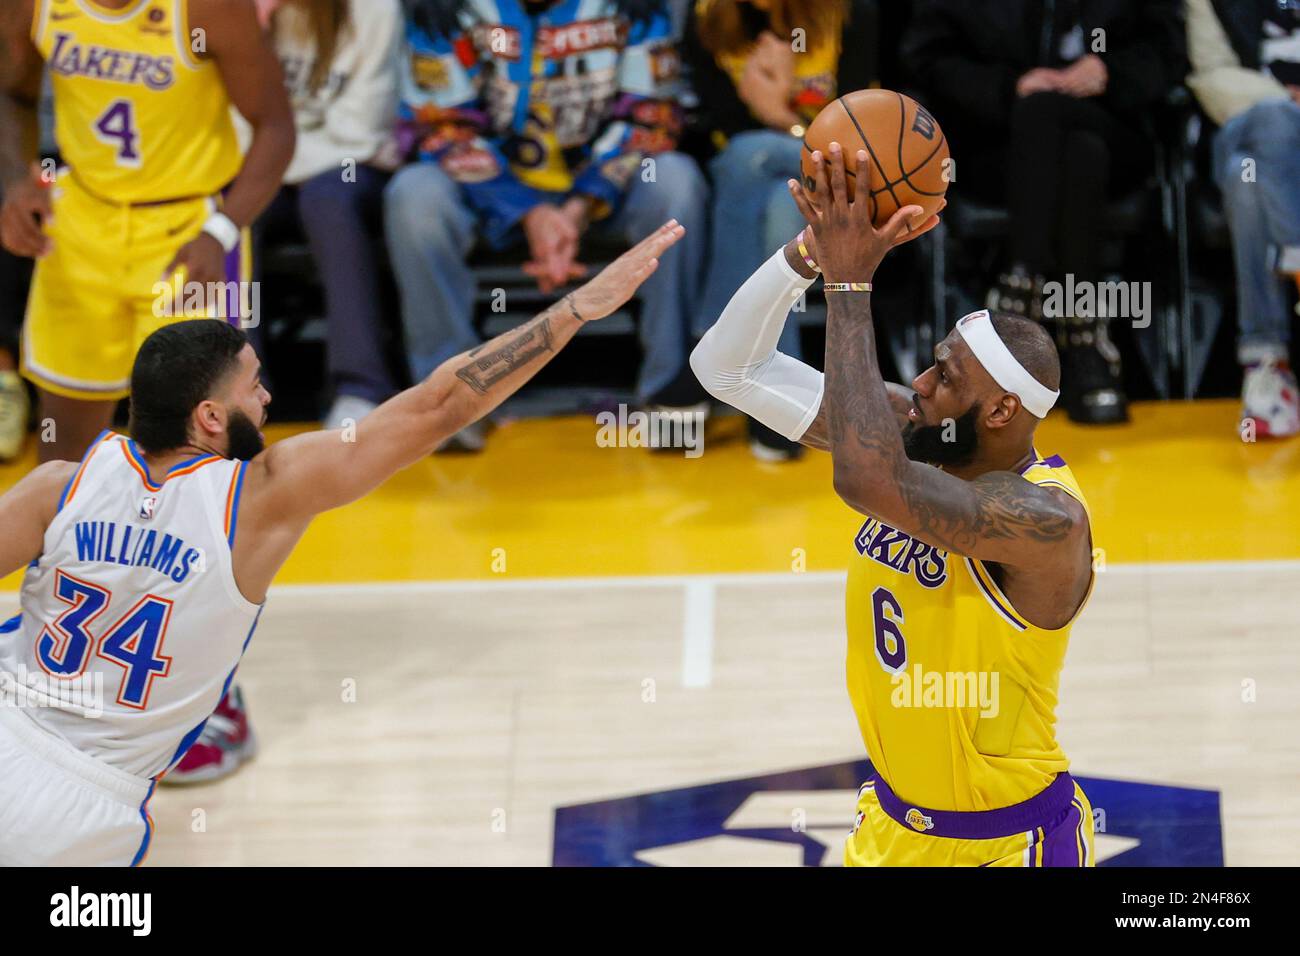 Los Angeles Lakers Forward LeBron James (L) schießt während eines NBA-Basketballspiels gegen Oklahoma City Thunder Guard Kenrich Williams. Endergebnisse: Thunder 133:130 Lakers Stockfoto